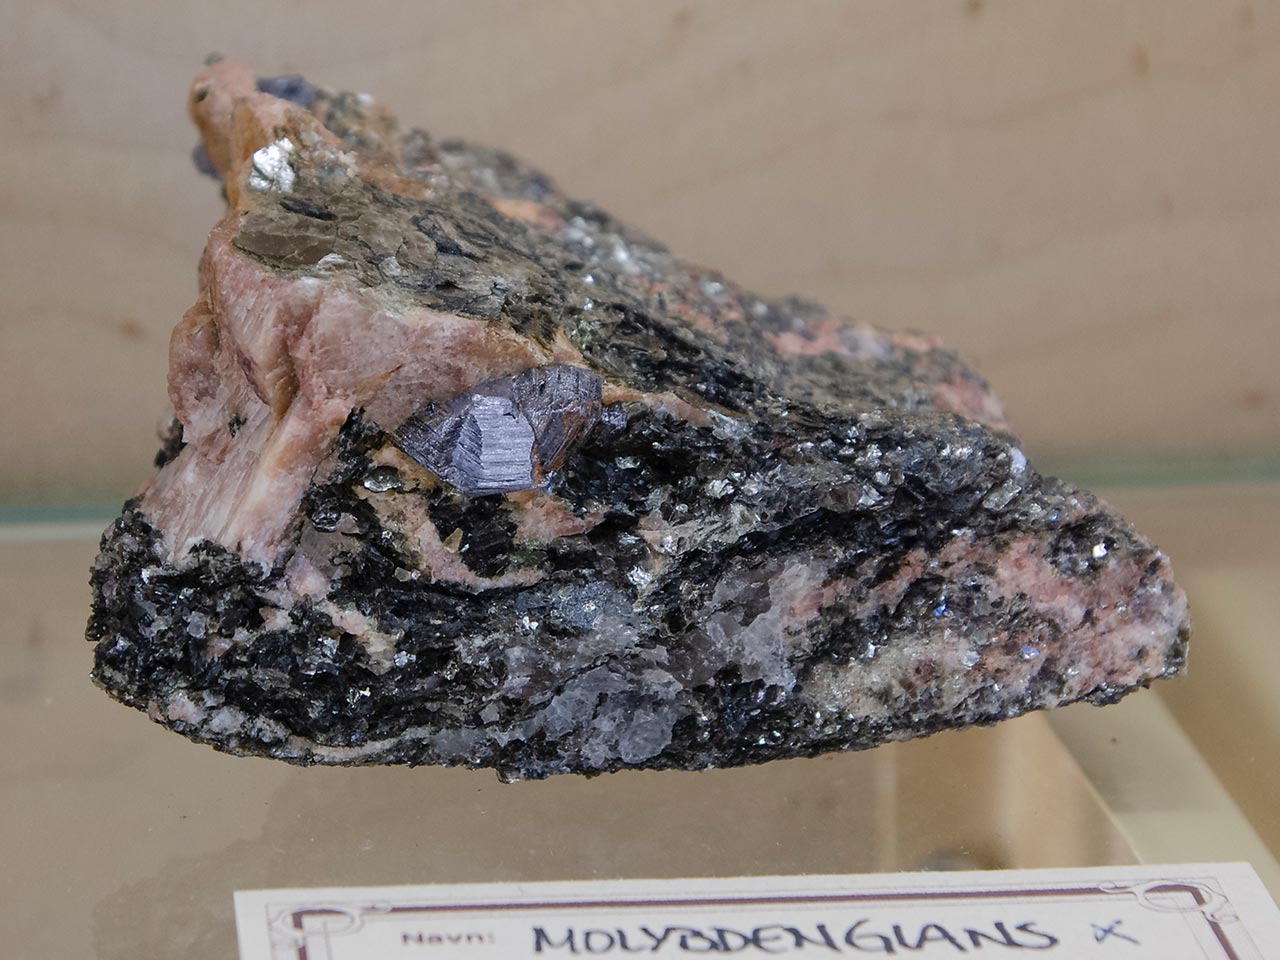 Well shaped molybdenite crystal in matrix from Bandaksli, Norway